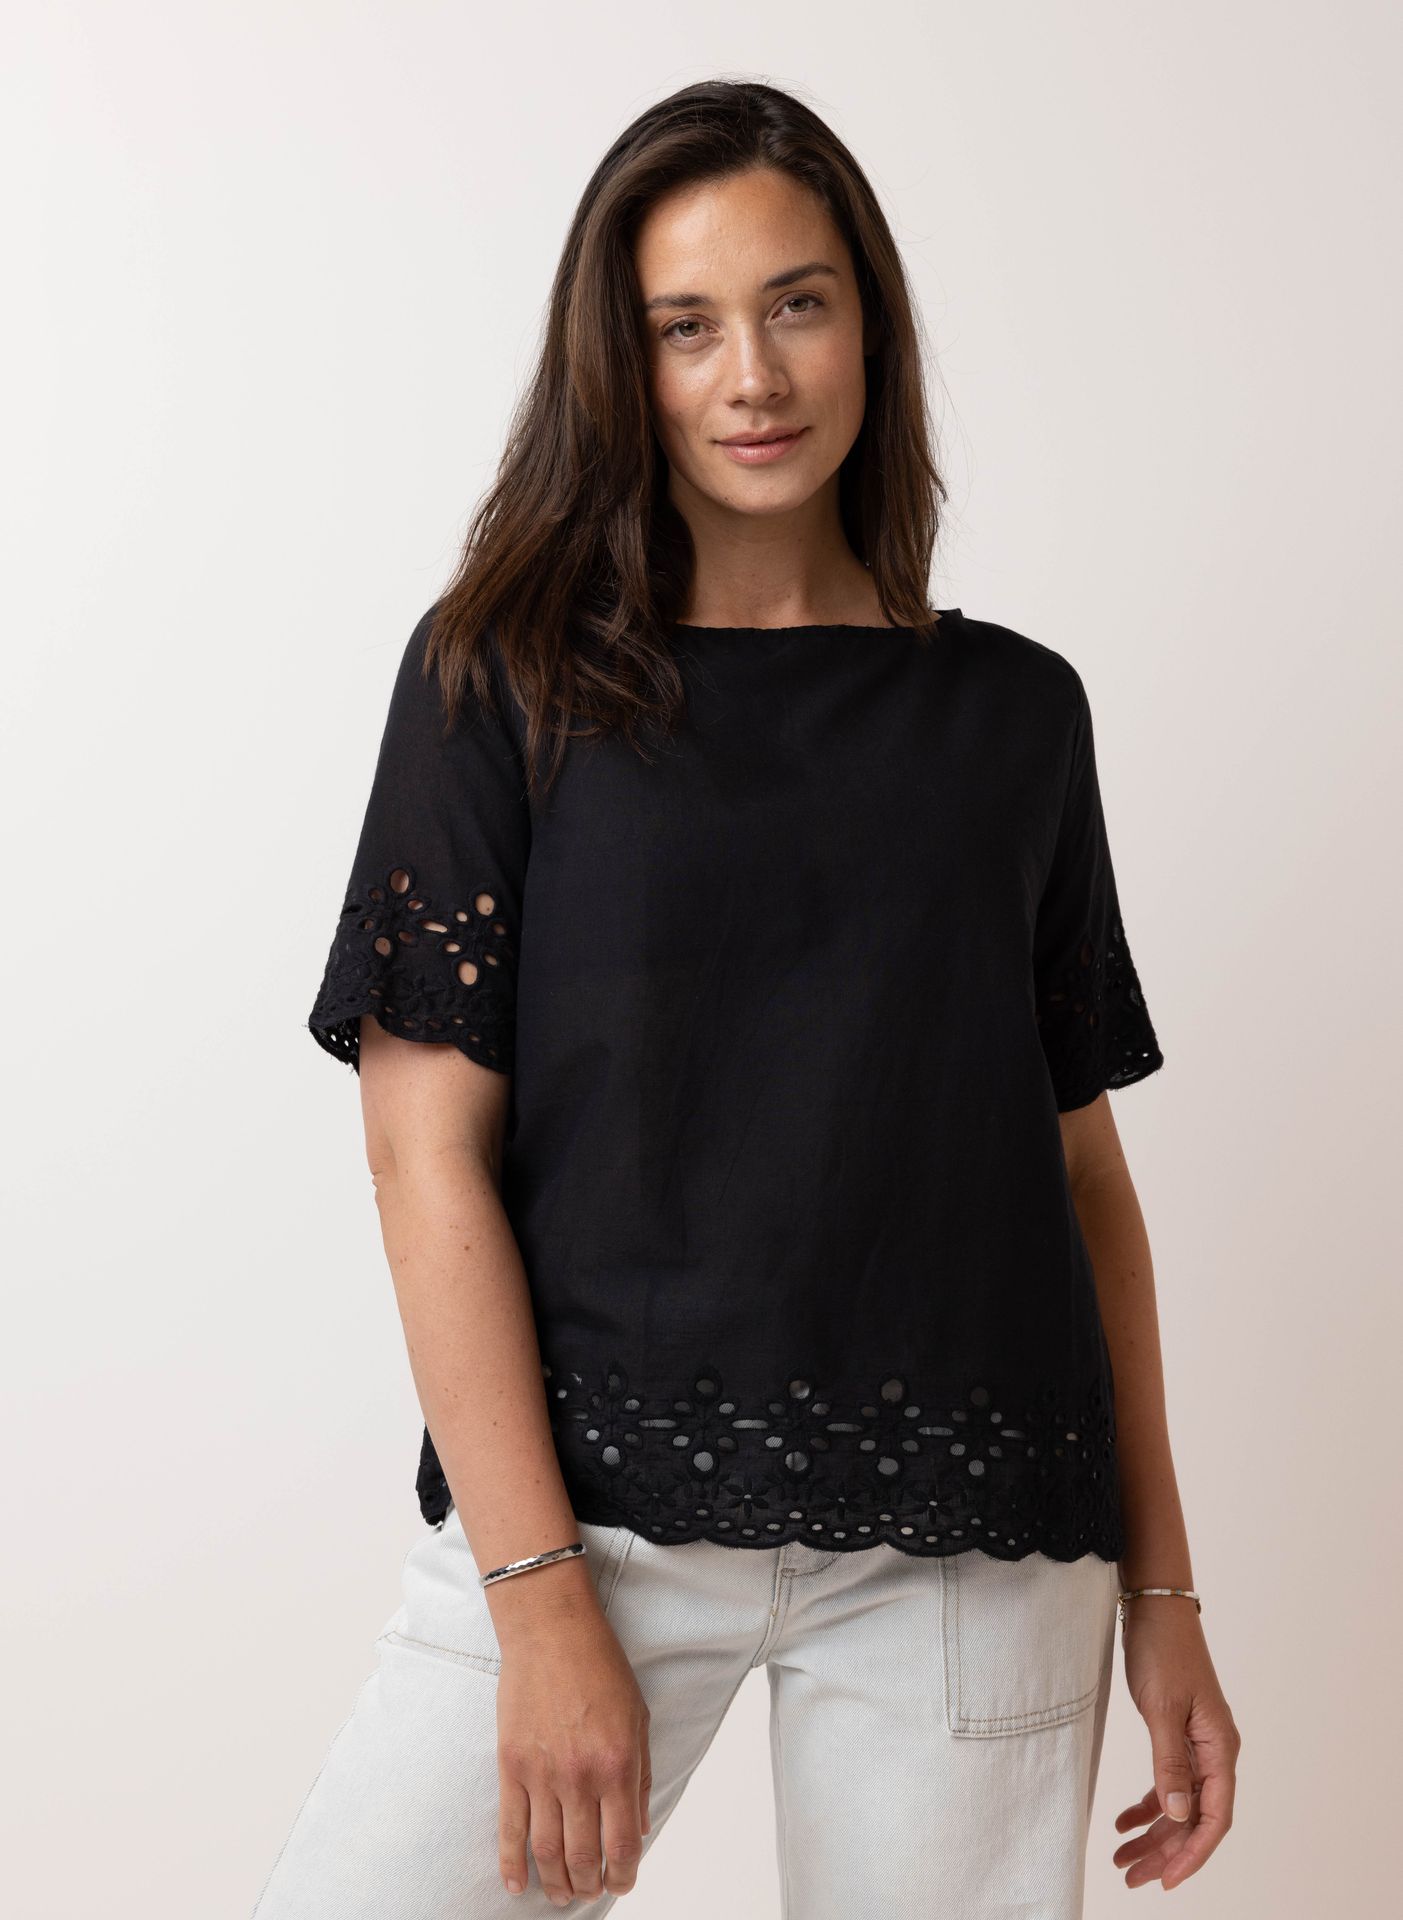 Norah Zwarte blouse black 210005-001